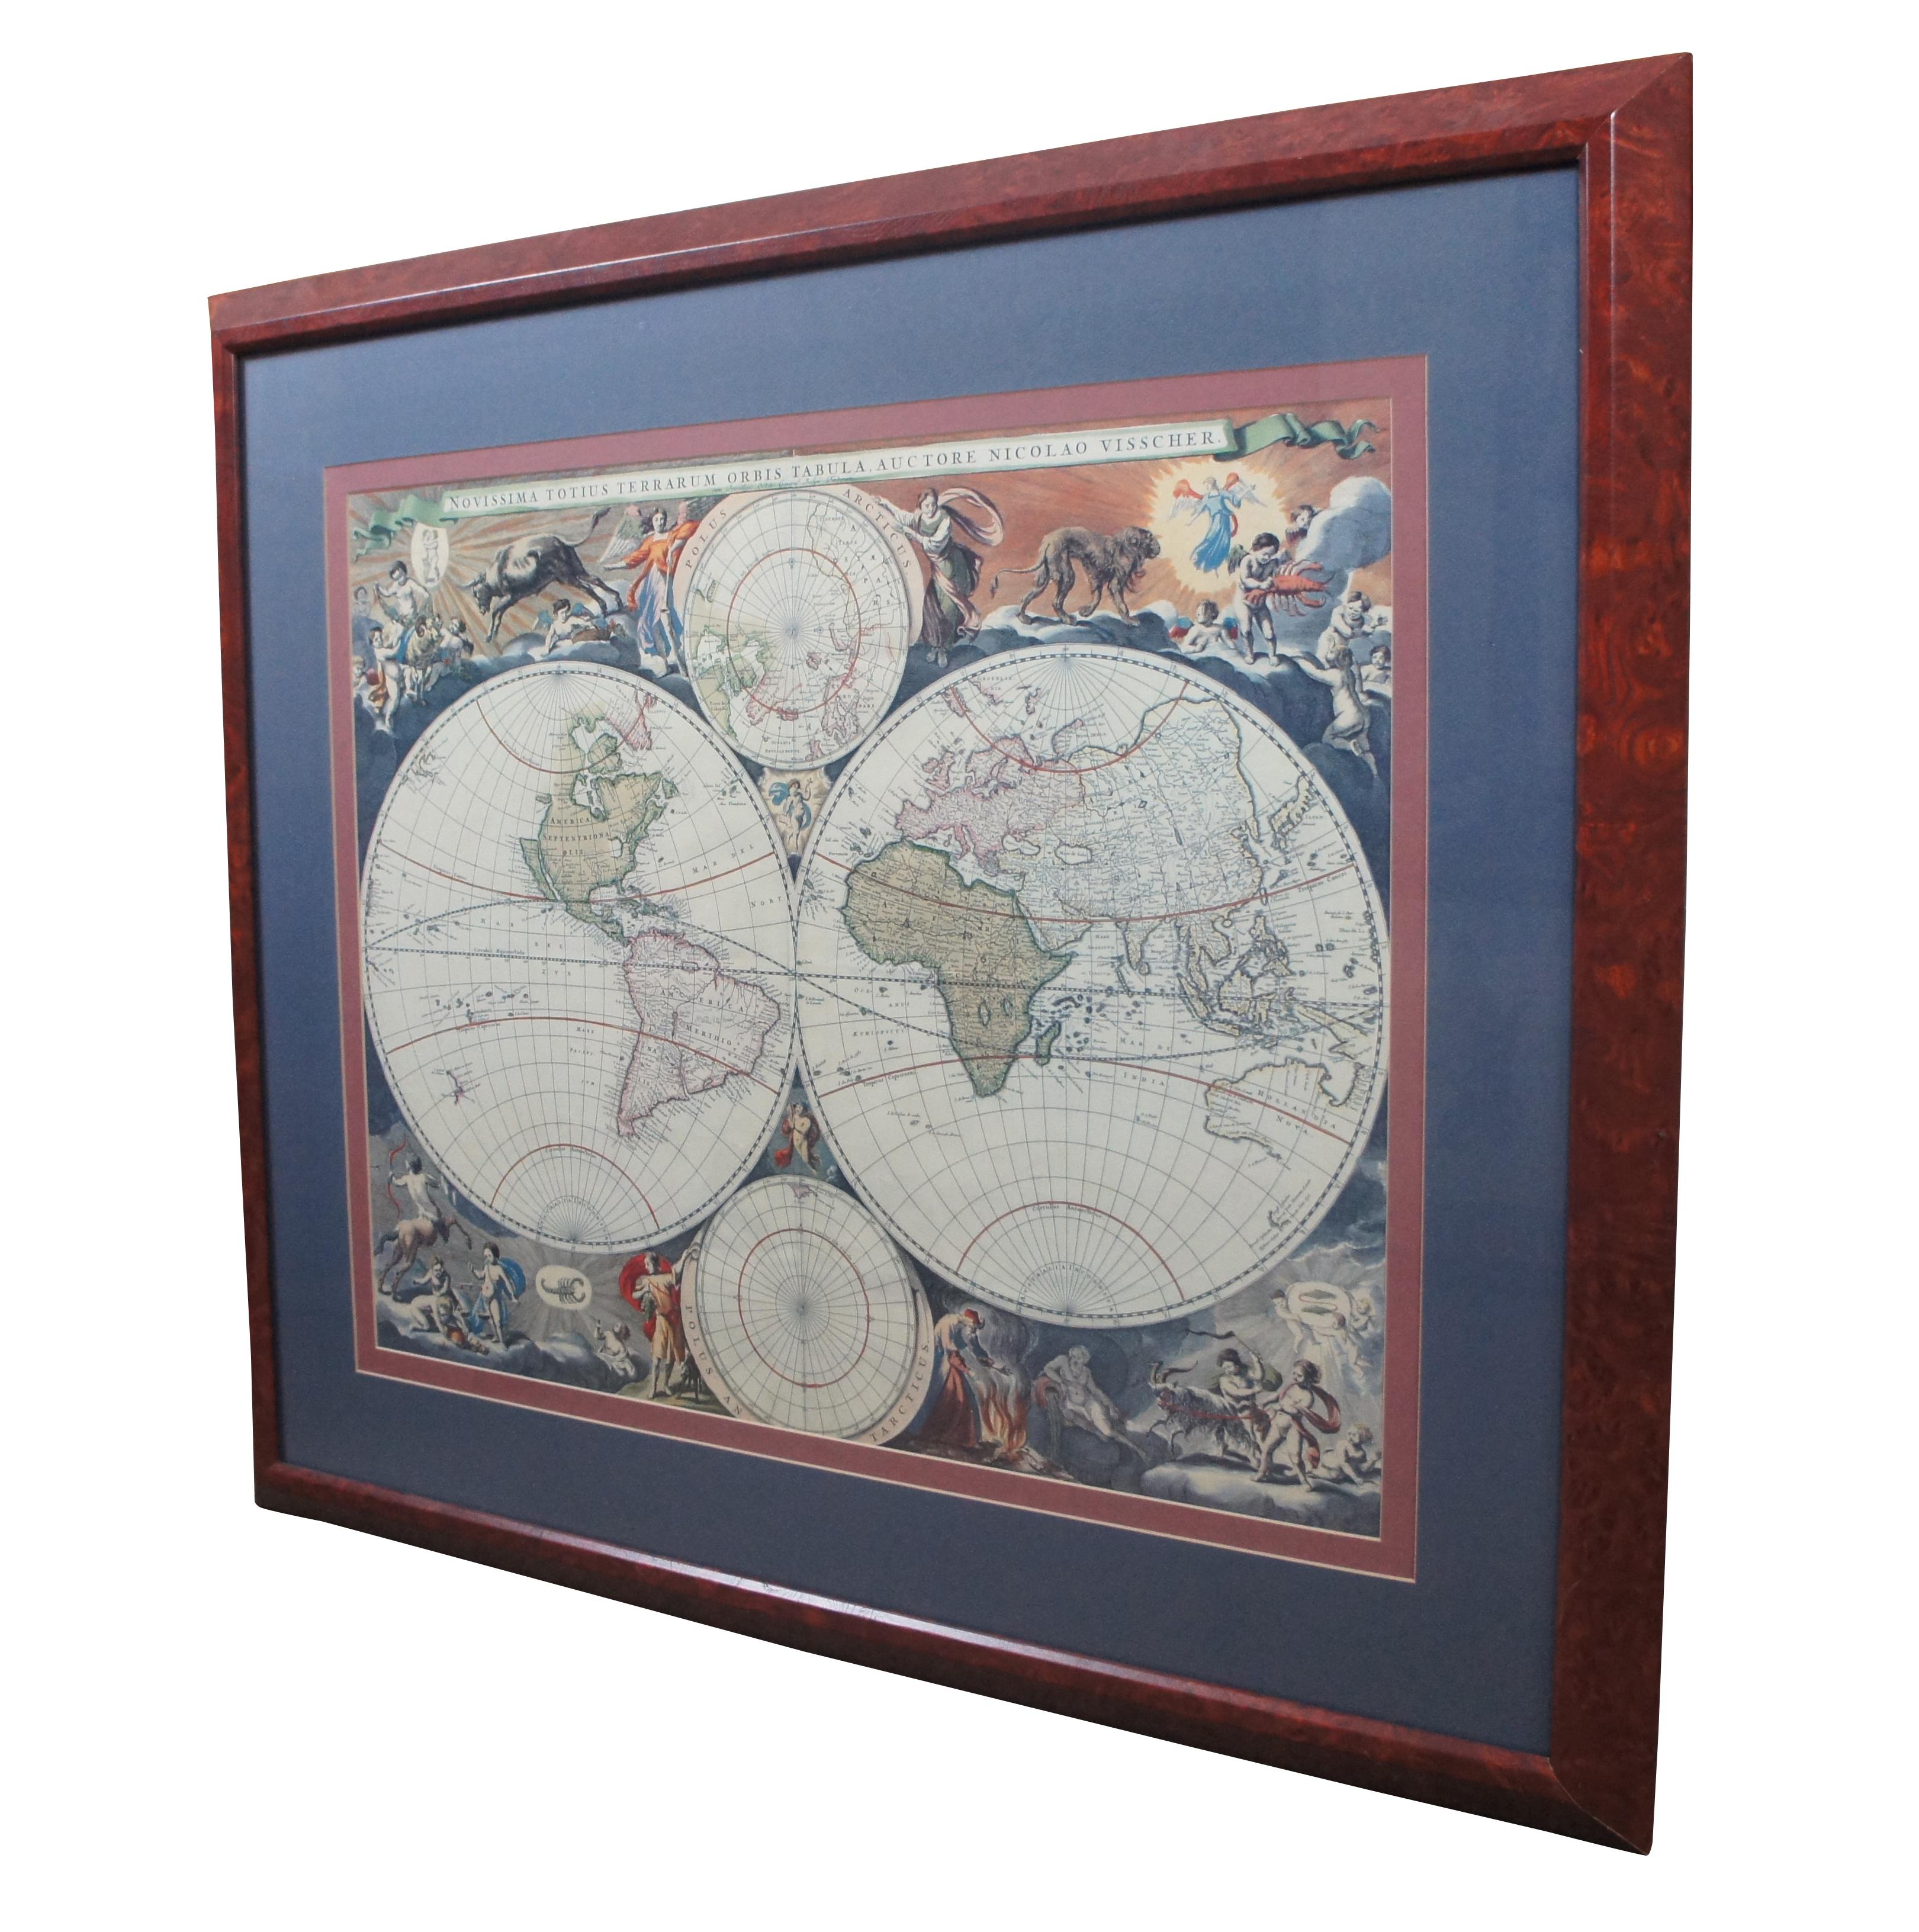 A stately print after Nicolaes Visscher's Novissima Totius Terrarum Orbis Tabula Map.  Neatly framed in burlwood.  

Dimensions:
39